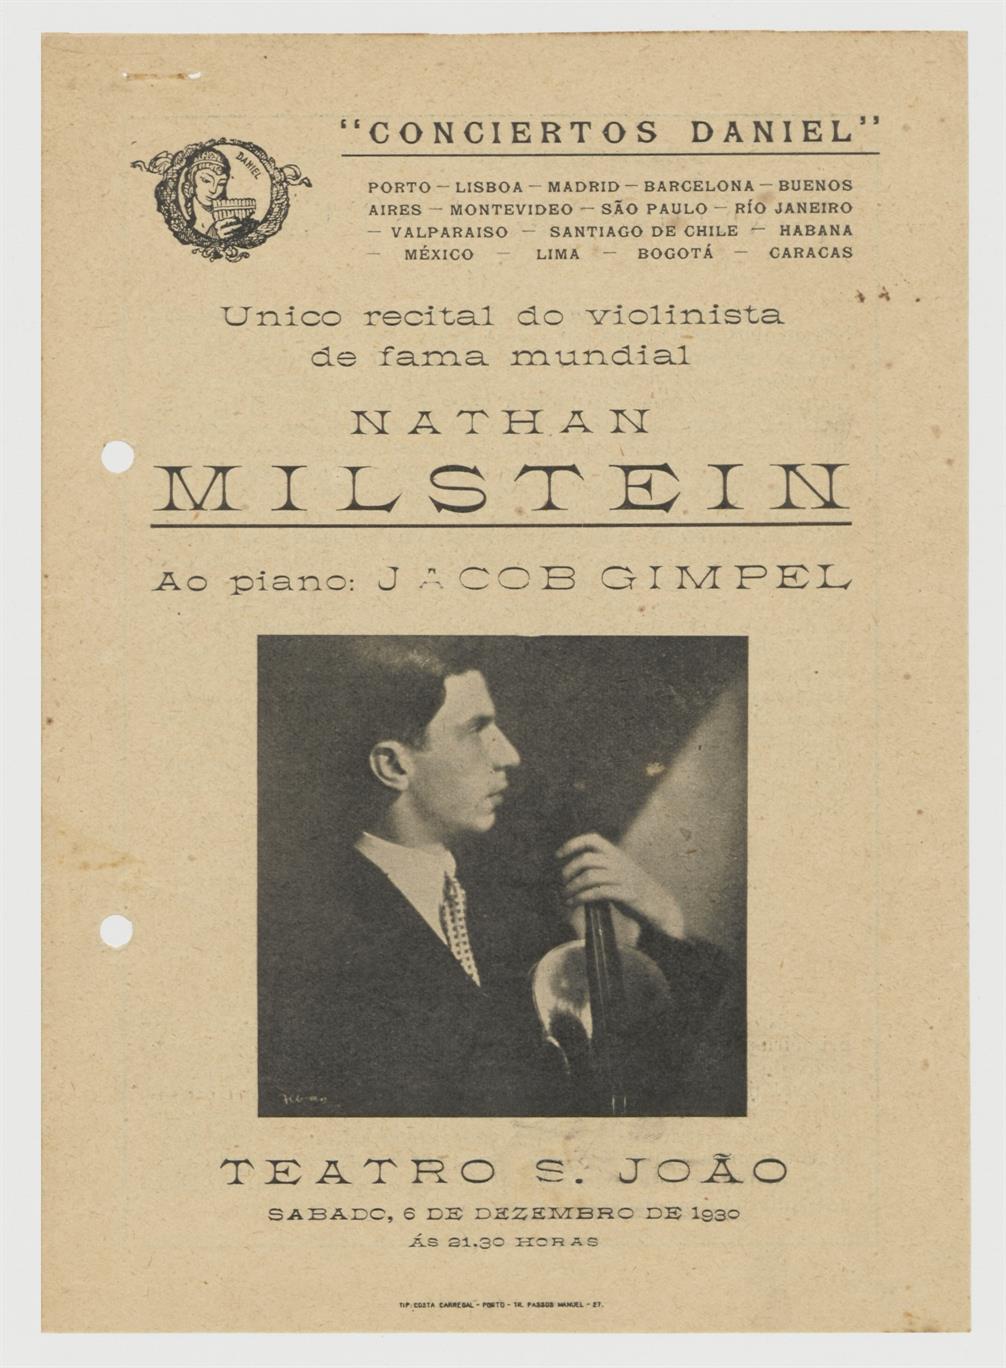 Único recital do violinista de fama mundial Nathan Milstein